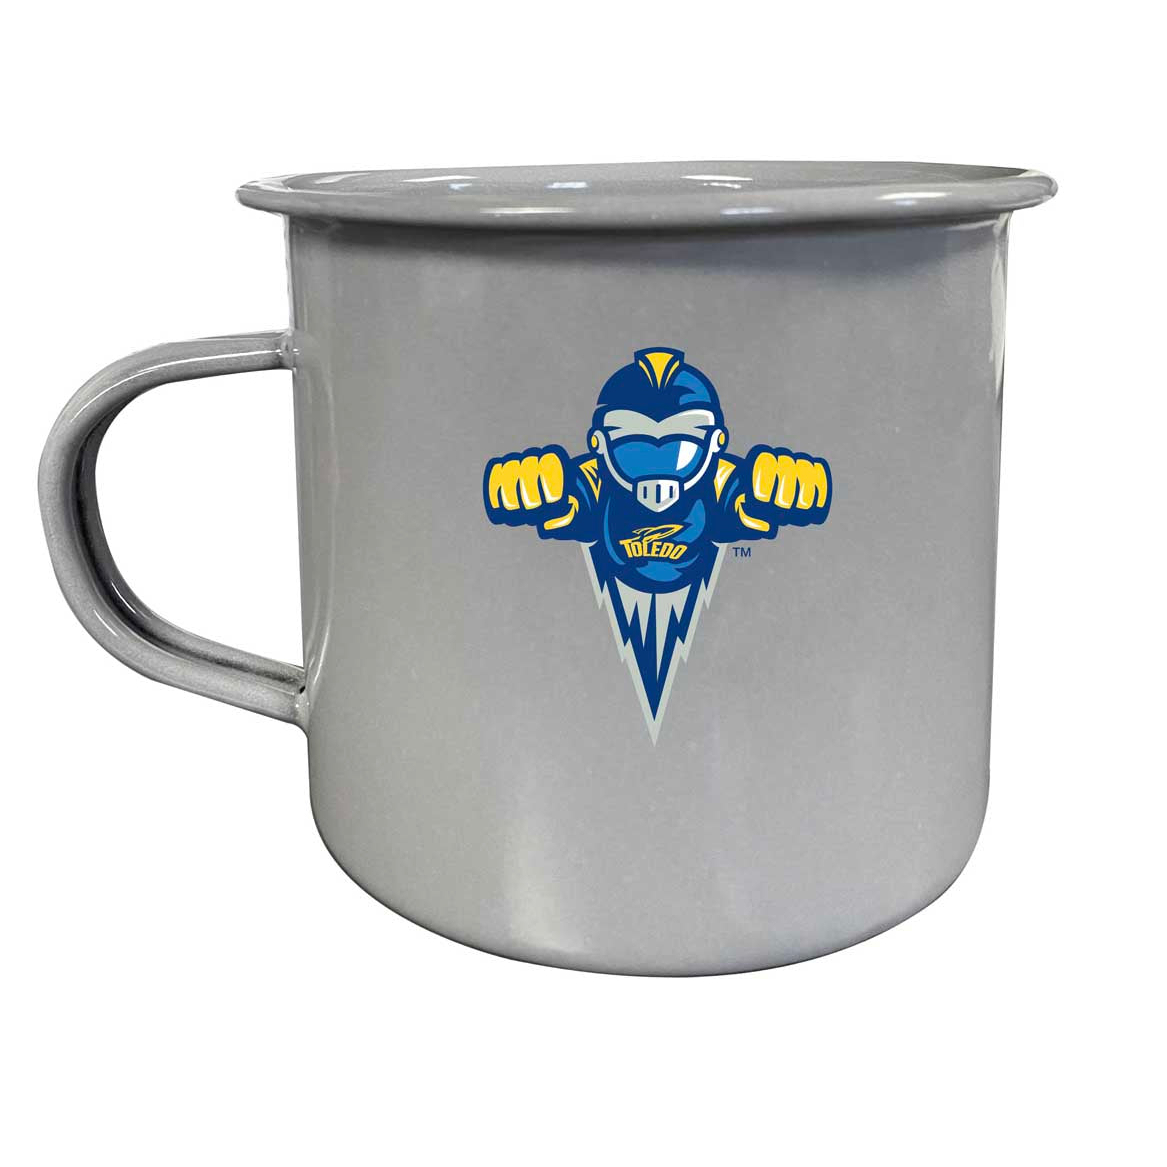 Toledo Rockets Tin Camper Coffee Mug - Choose Your Color - Navy